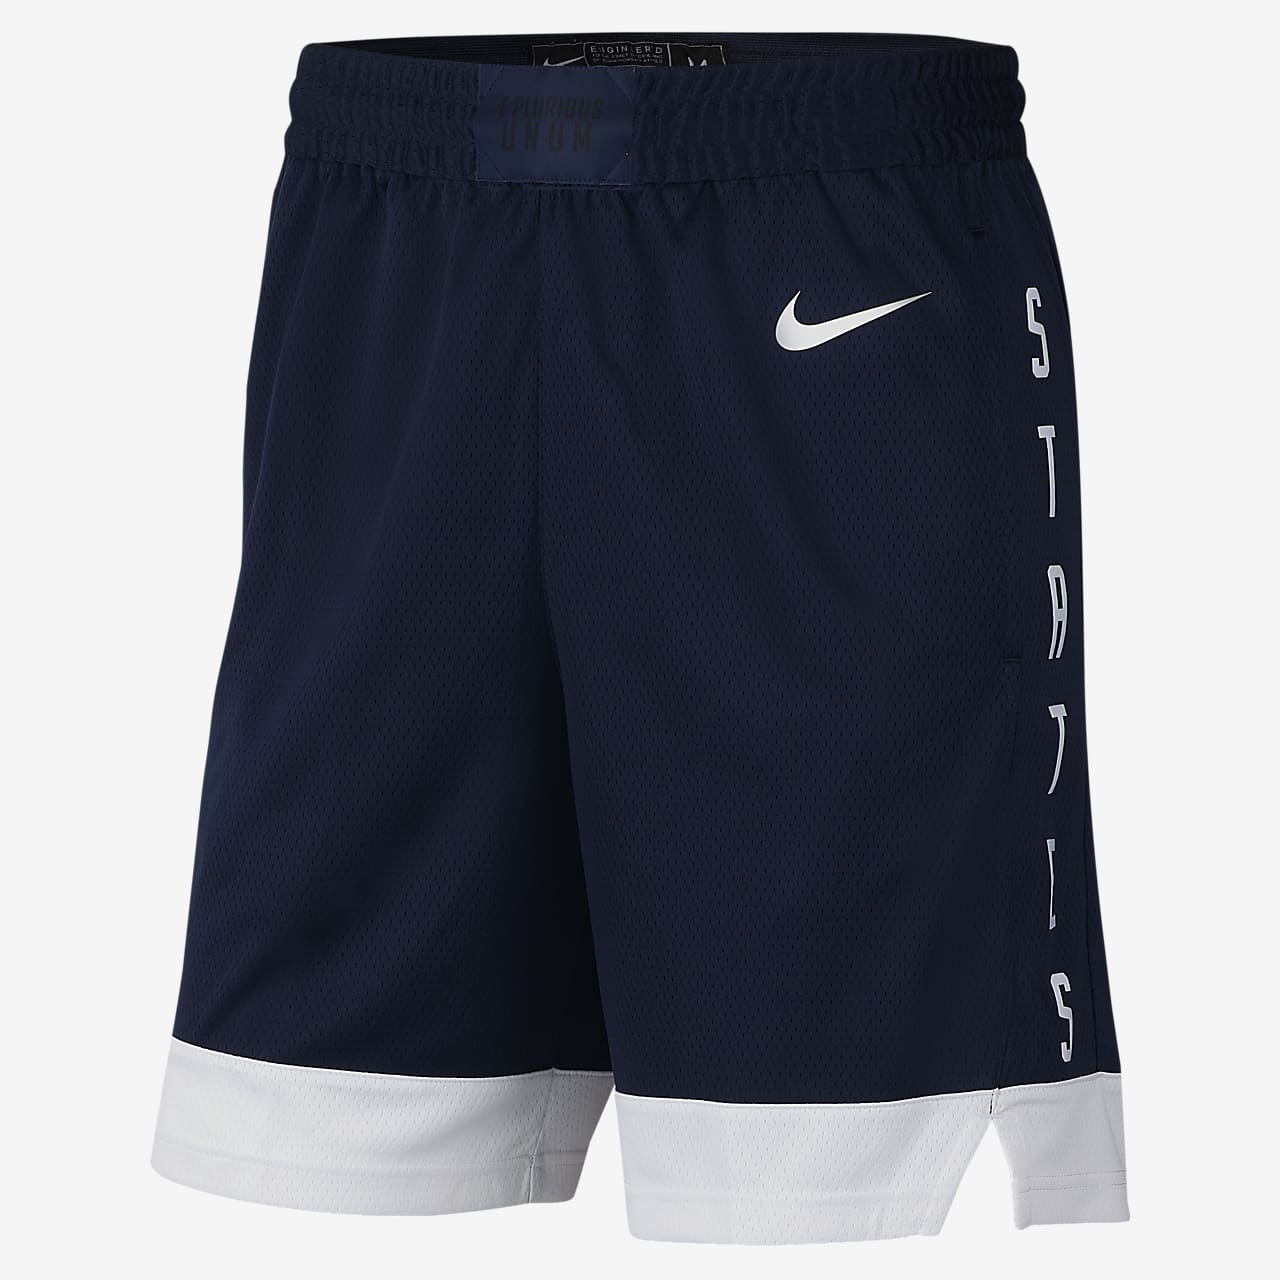 Shop USA Nike (Road) Men's Basketball Shorts